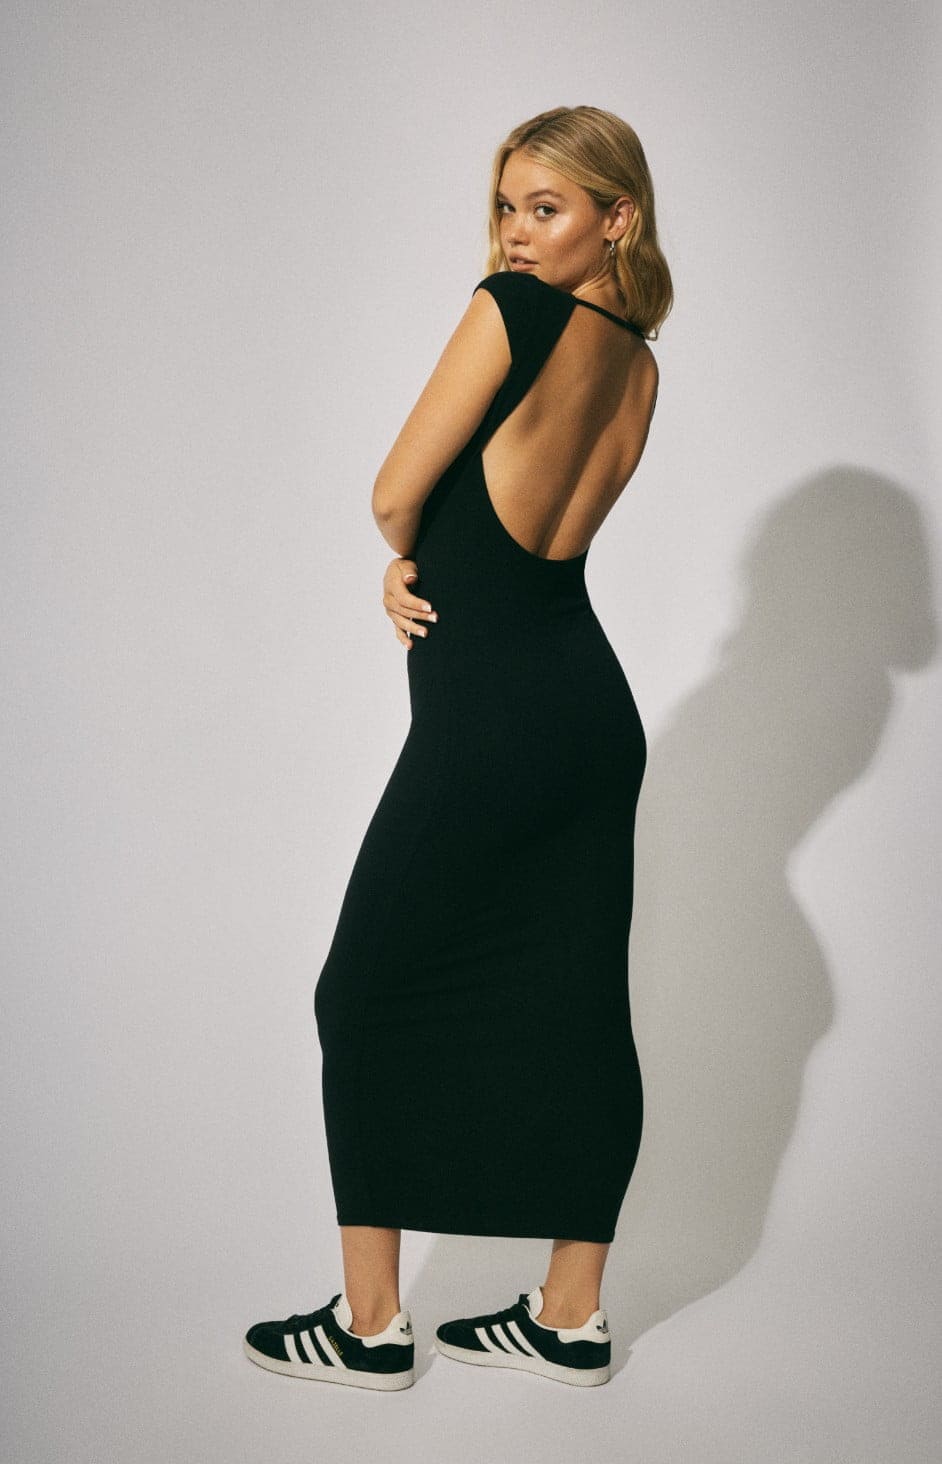 Model wears a backless black maxi dress.